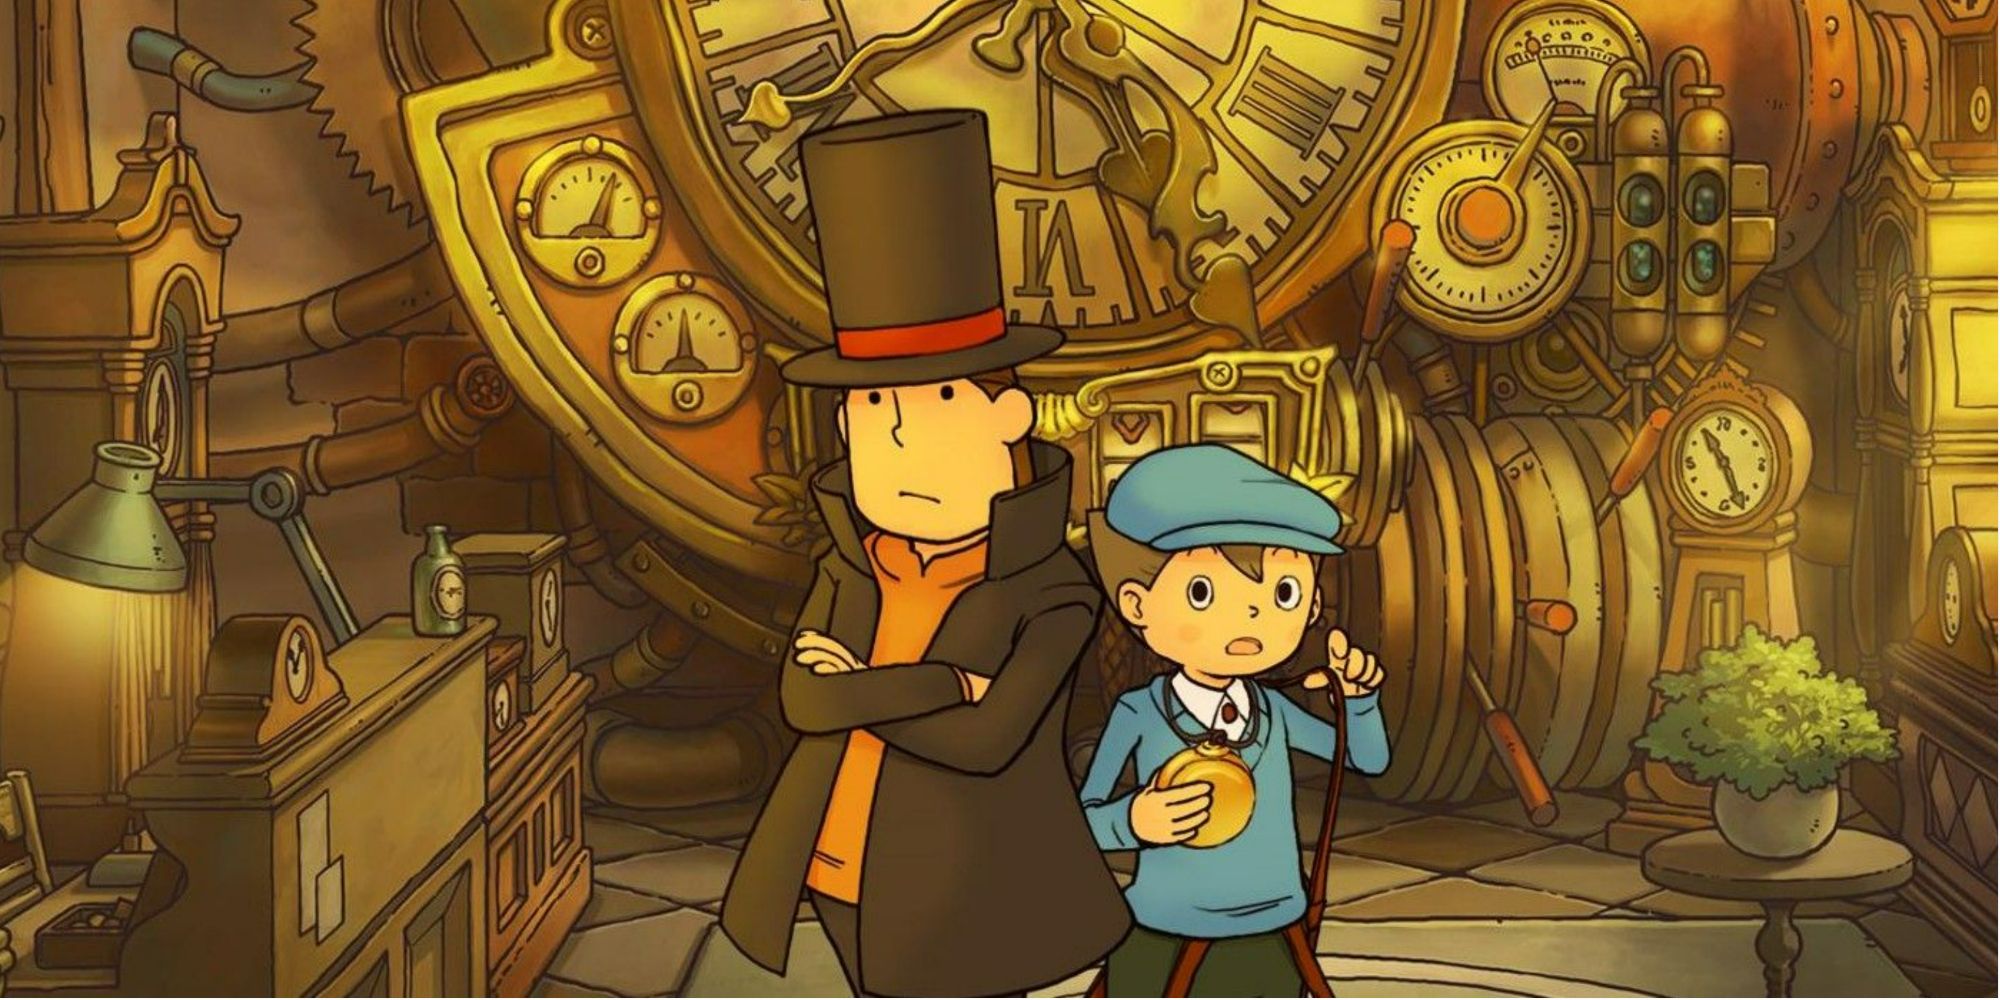 professor layton charctes standing in front of giant clockwork cog machine